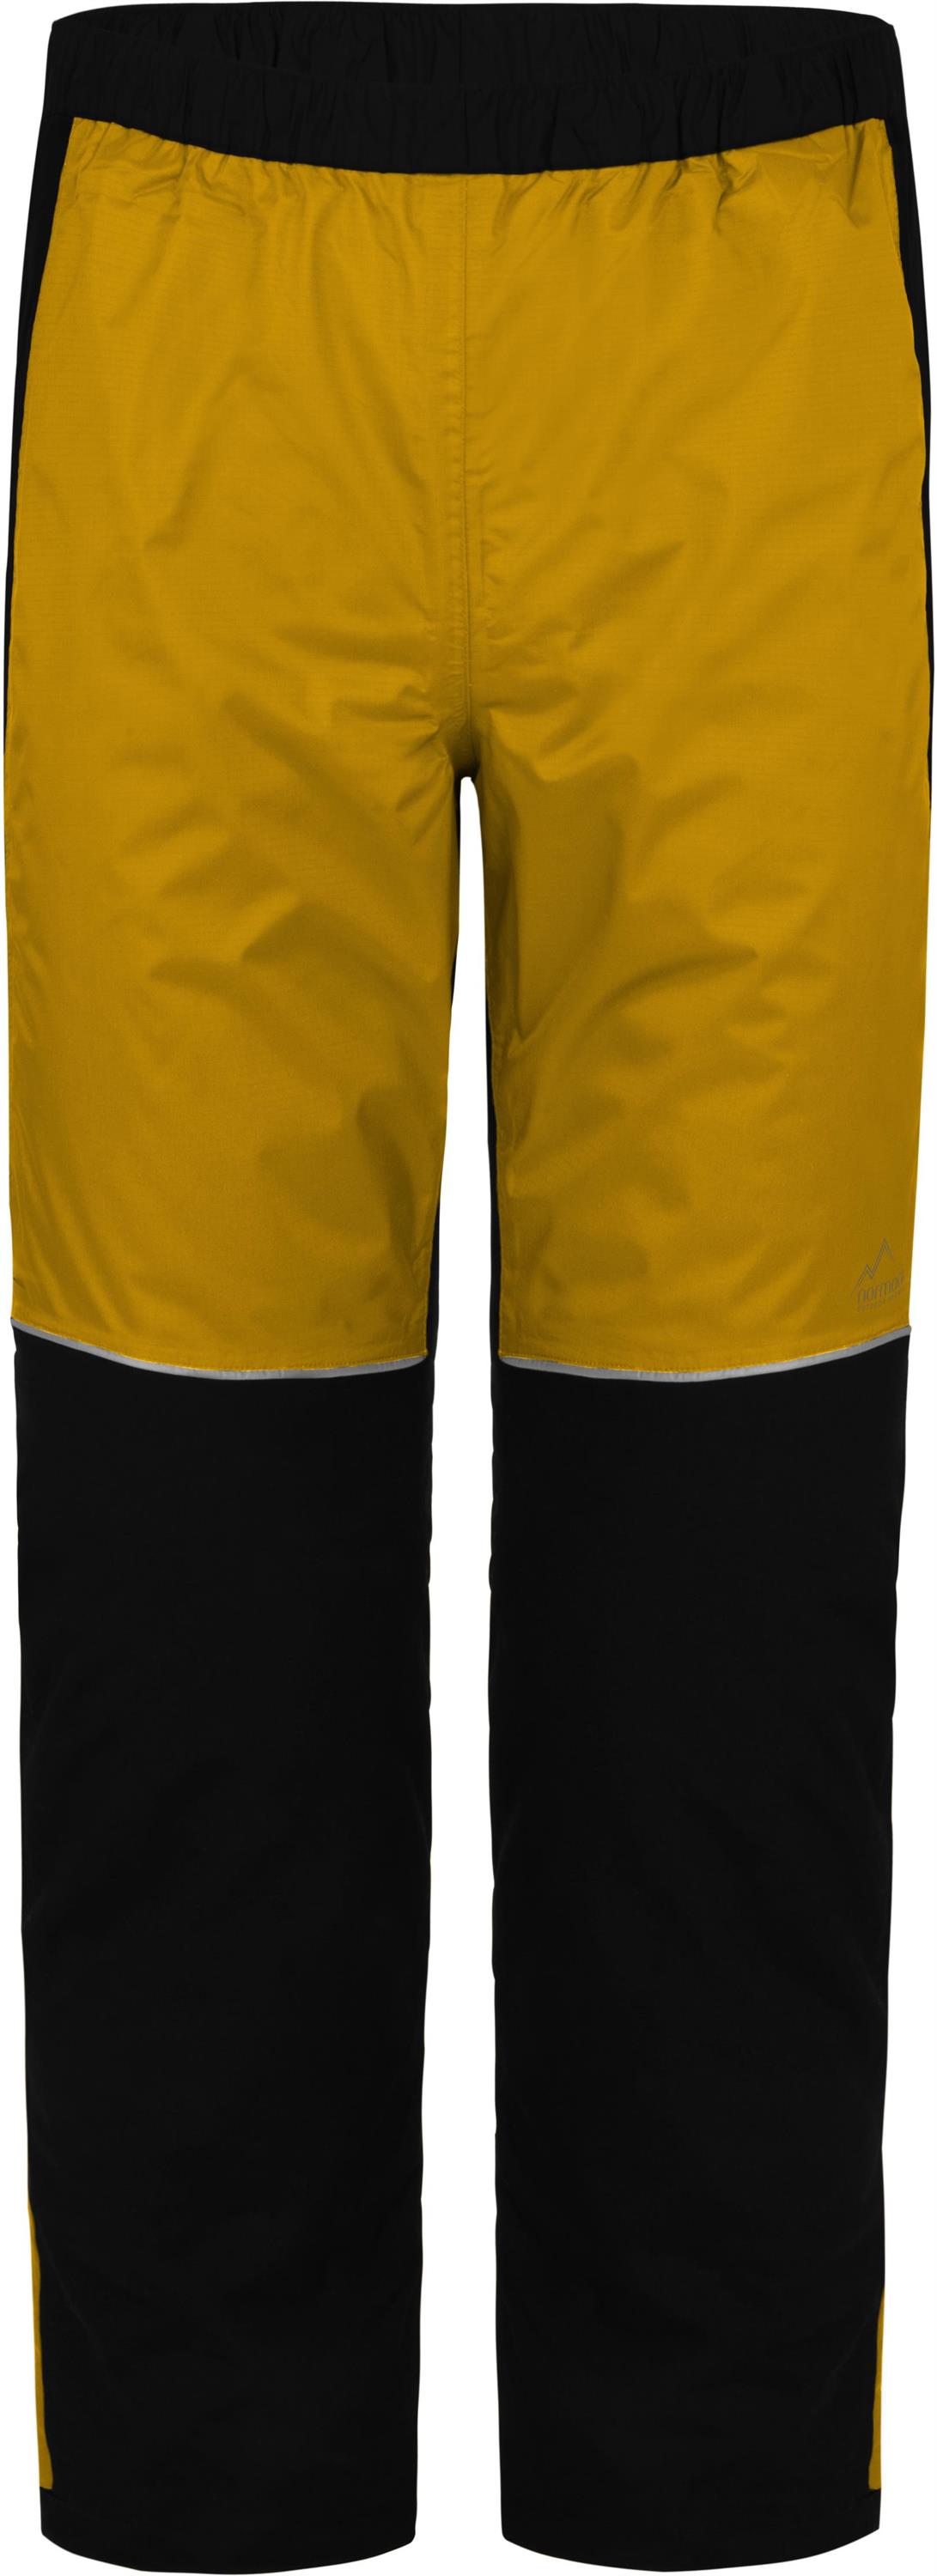 Водонепроницаемые брюки Normani Outdoor Sports Kinder „Saanich“, желтый водонепроницаемые брюки normani outdoor sports kinder „saanich“ бензиновый